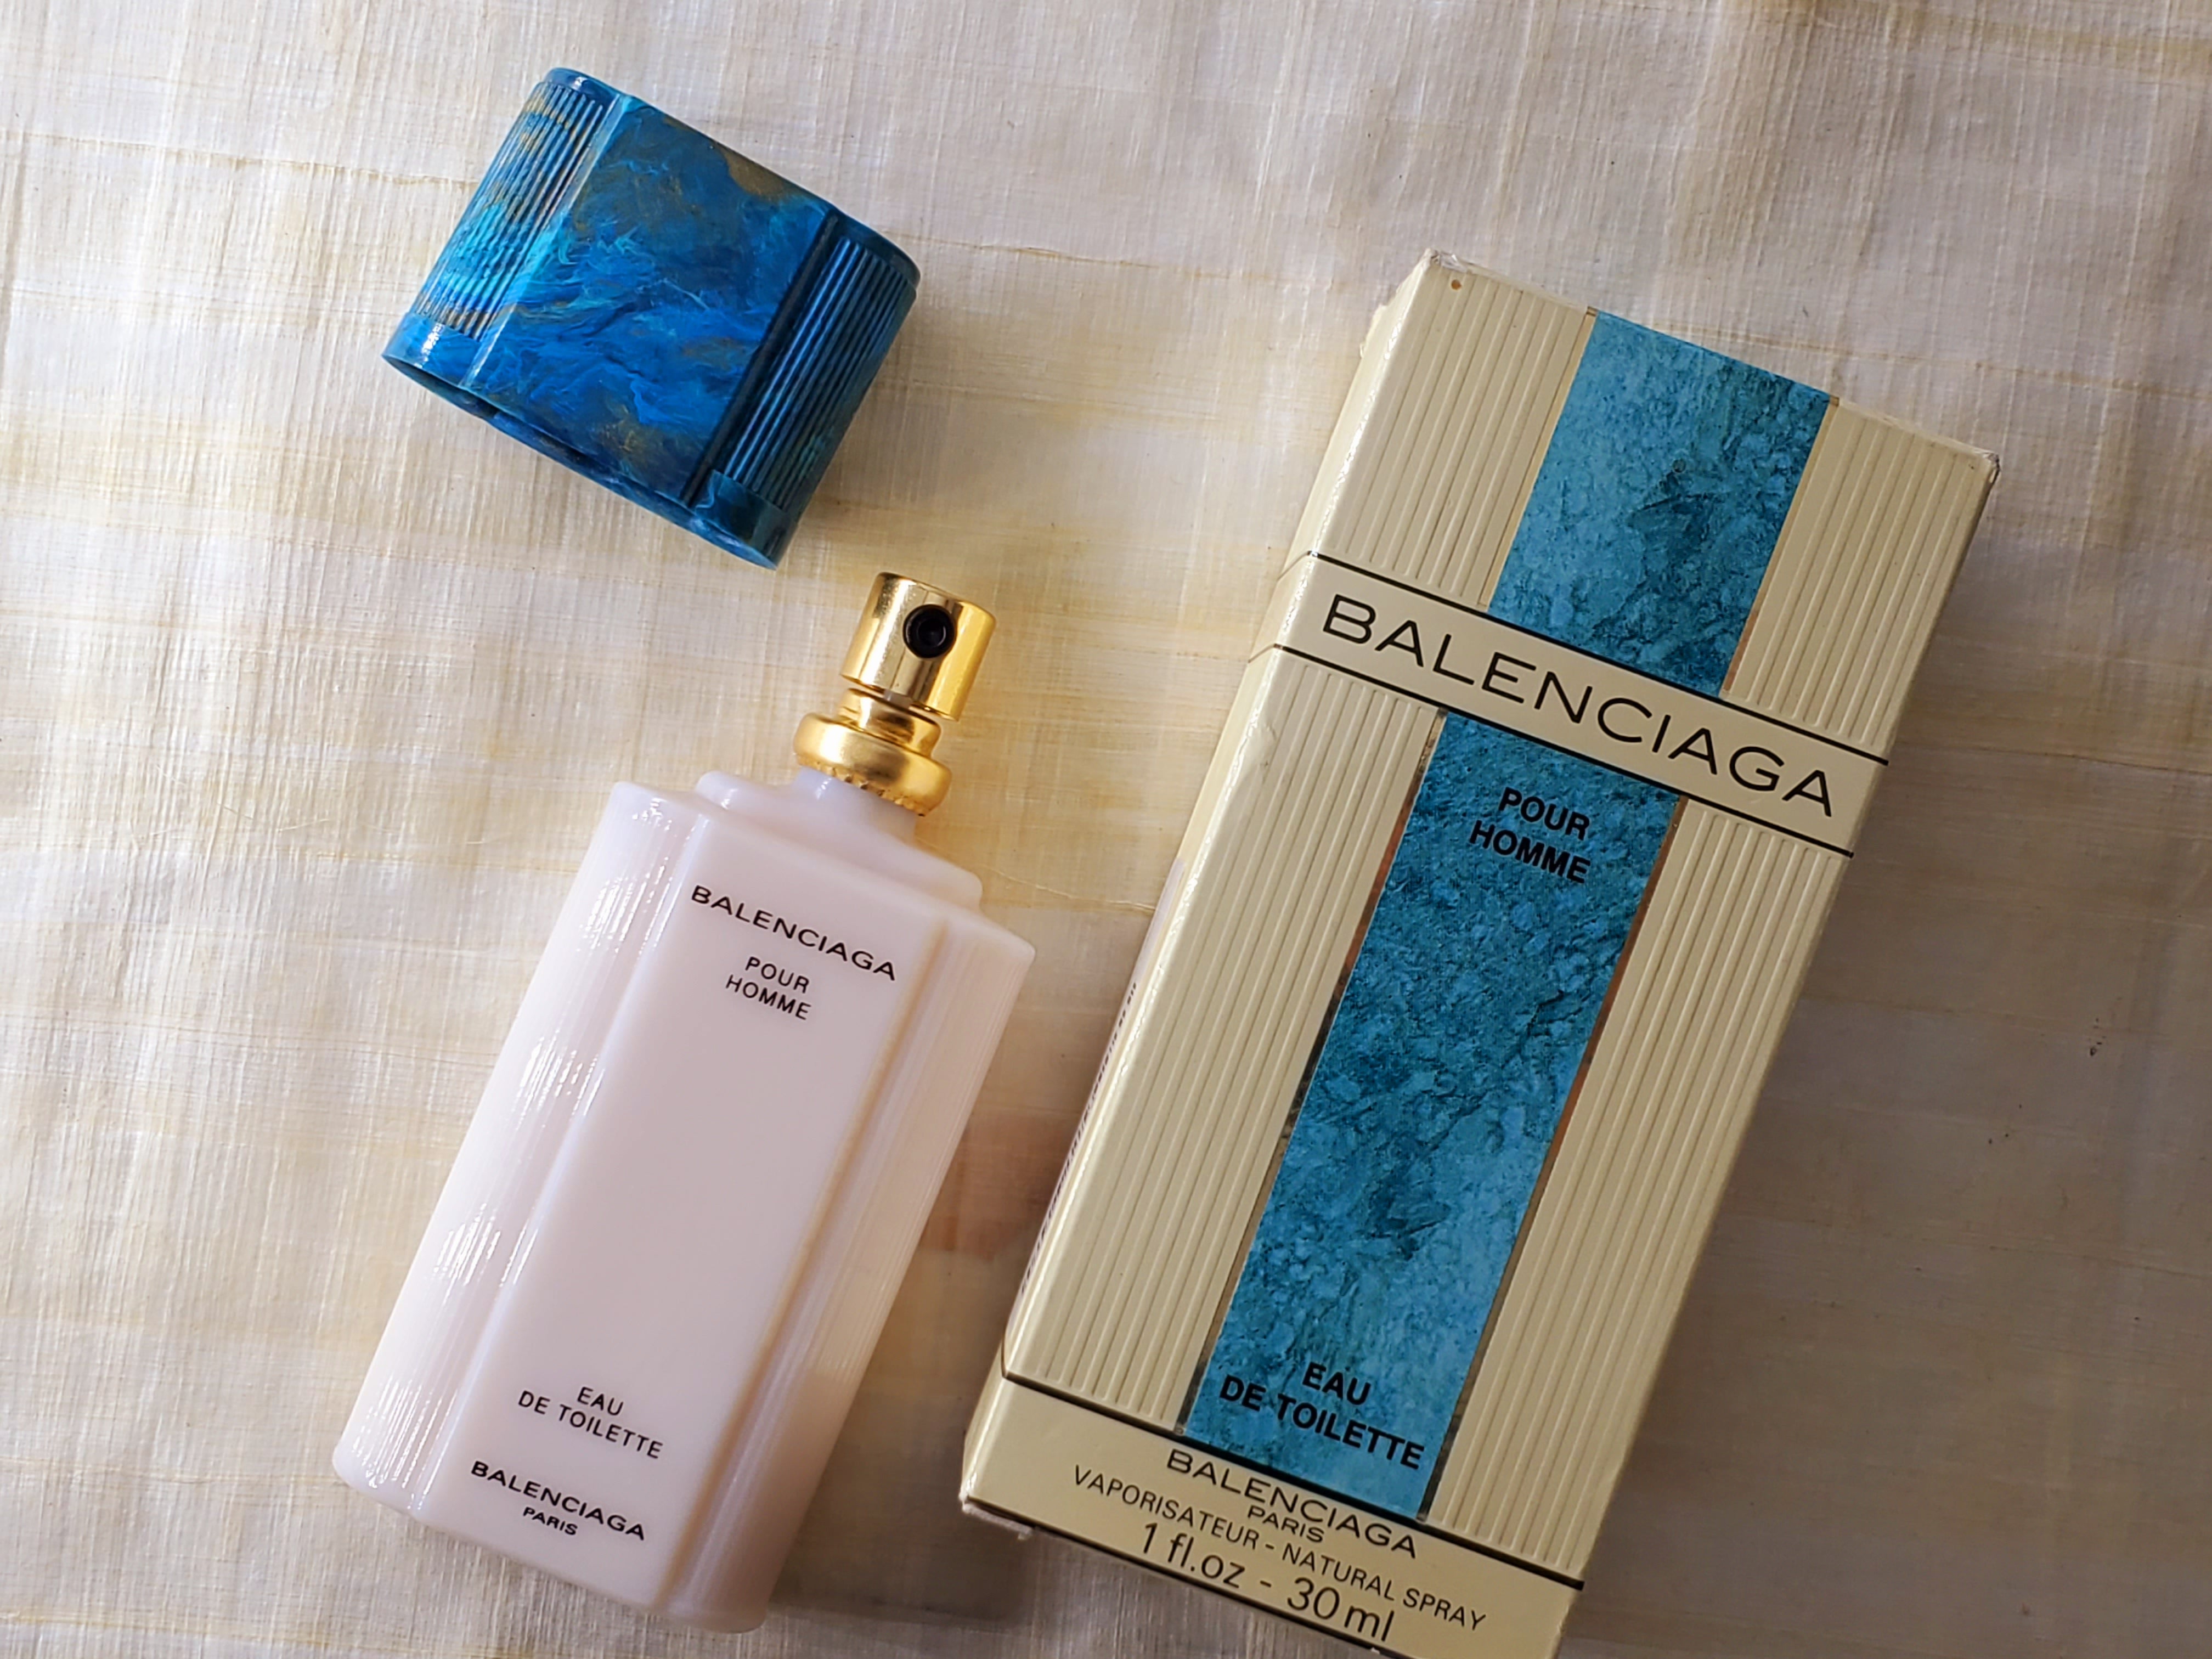 Balenciaga Paris fragrance  Miscellaneous Goods  Gumtree Australia  Kuringgai Area  Pymble  1314507083